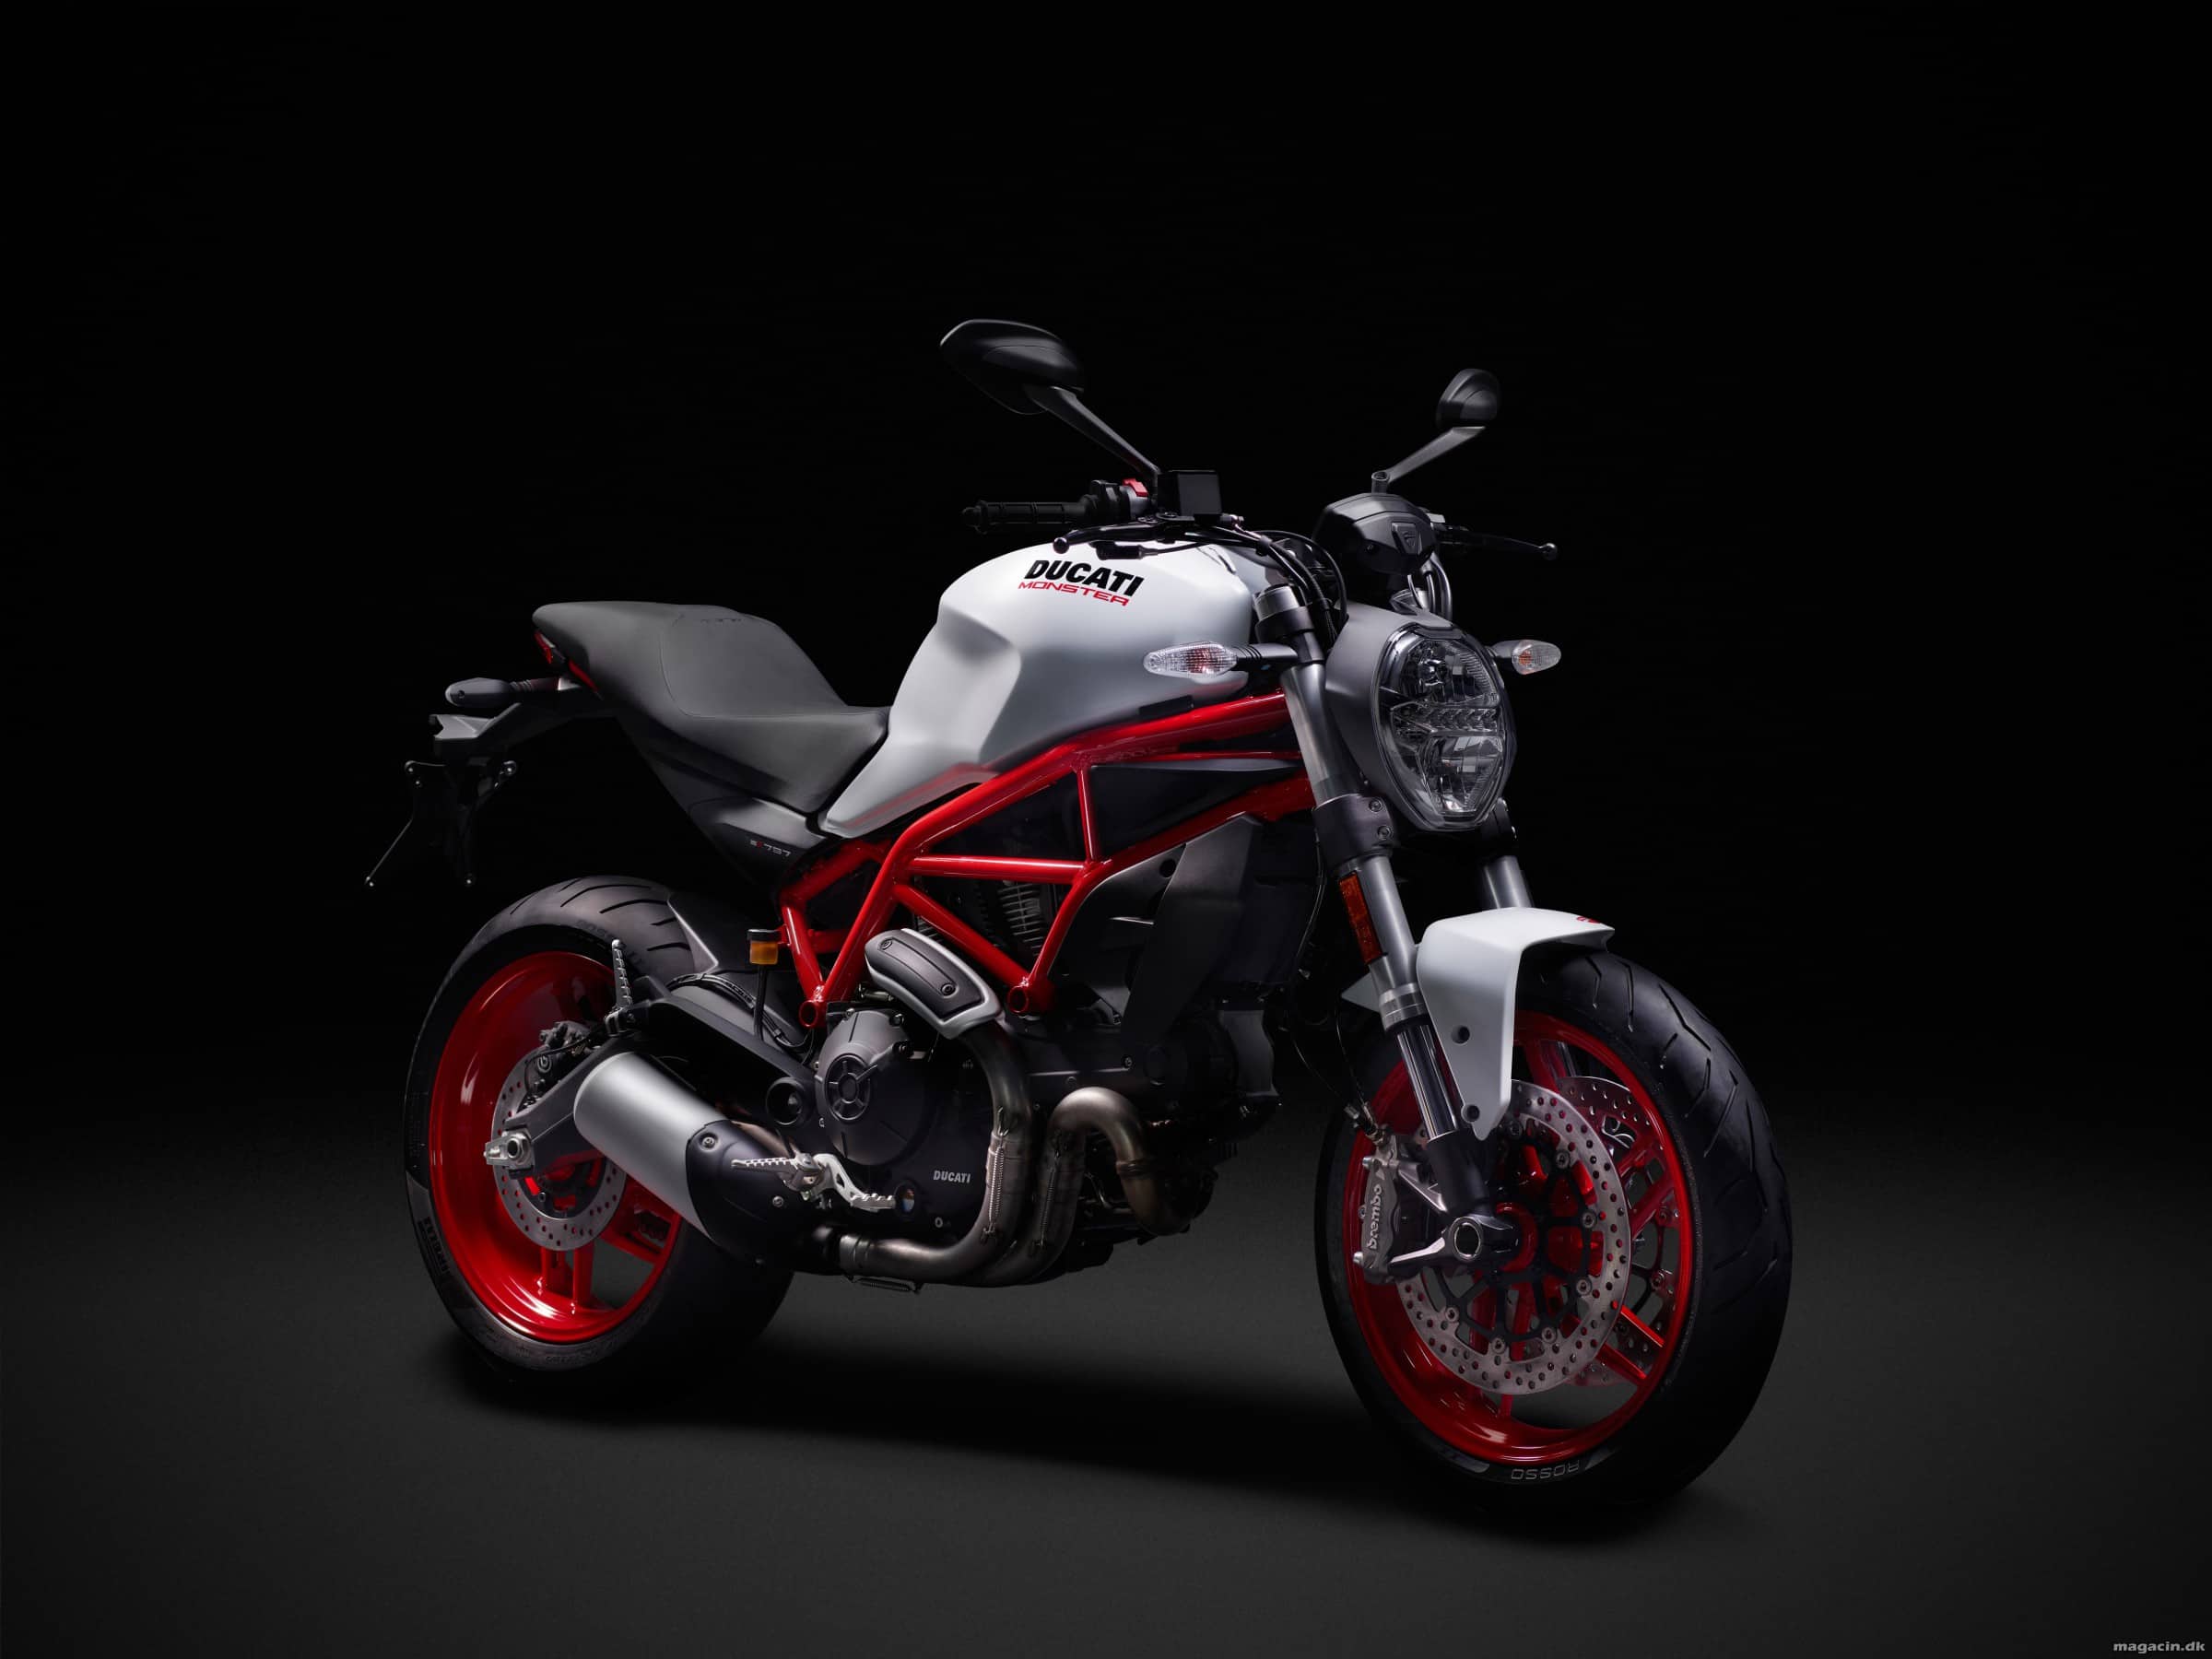 Prøvekørt: 2017 Ducati Monster 797 – Let’s Have Fun